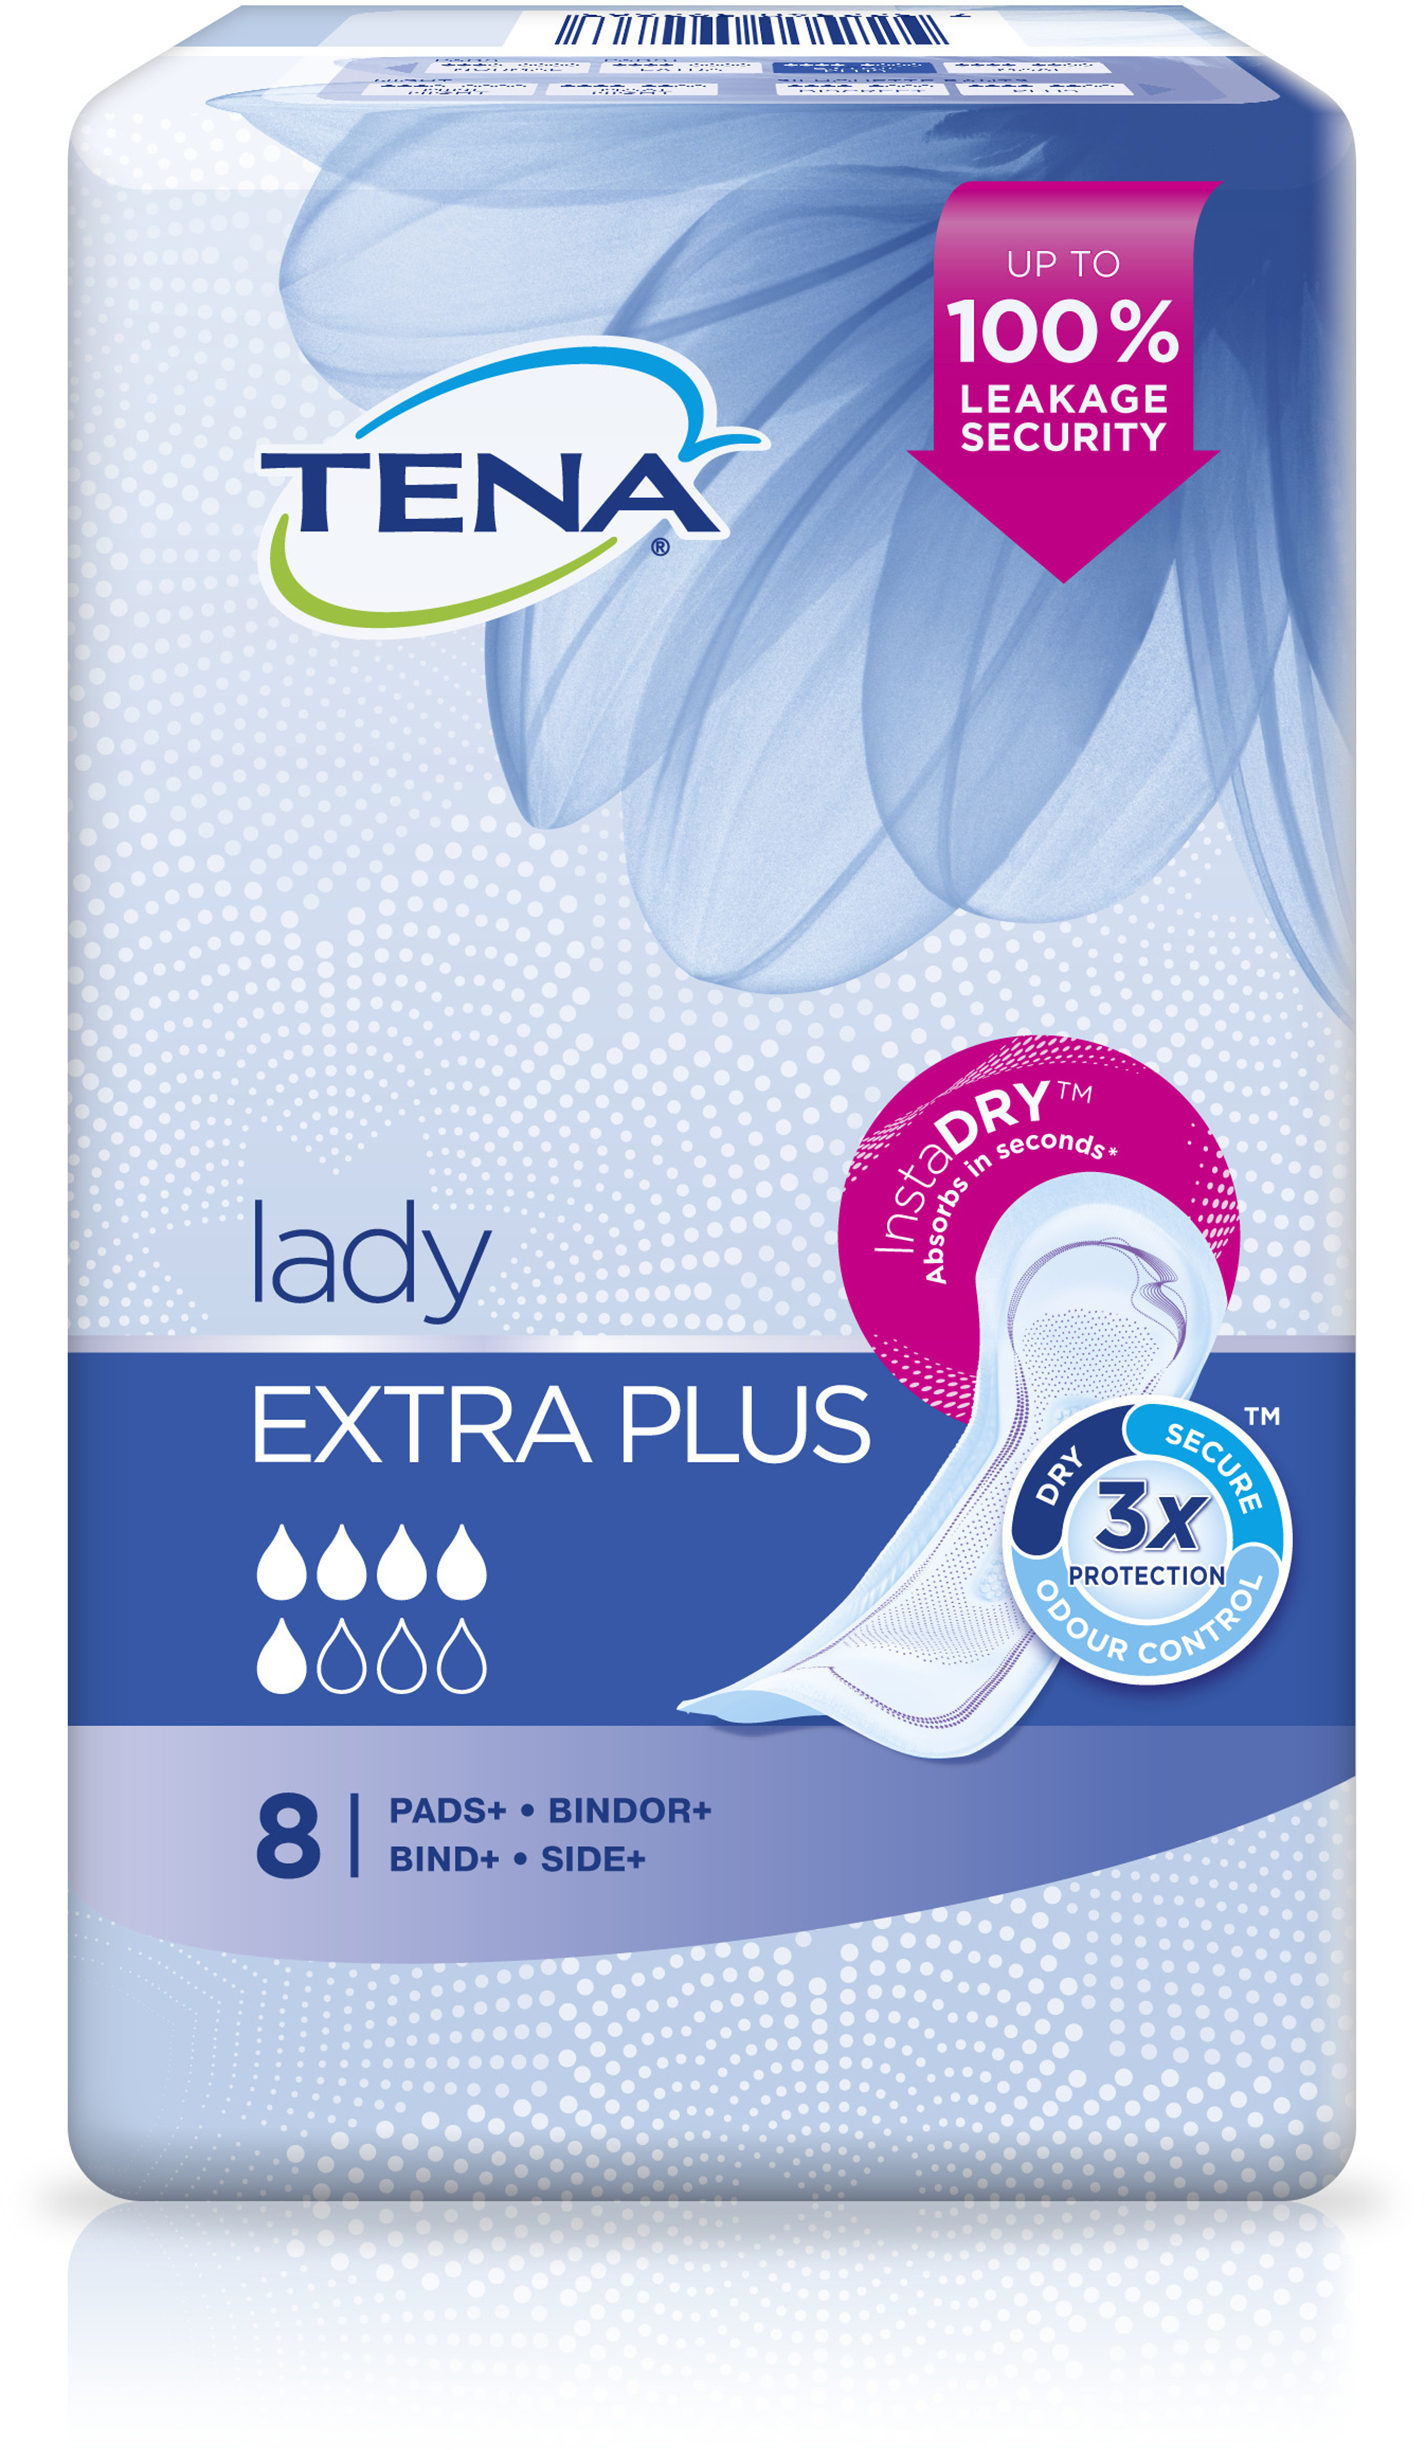 TENA Lady Extra Plus ID 8 st